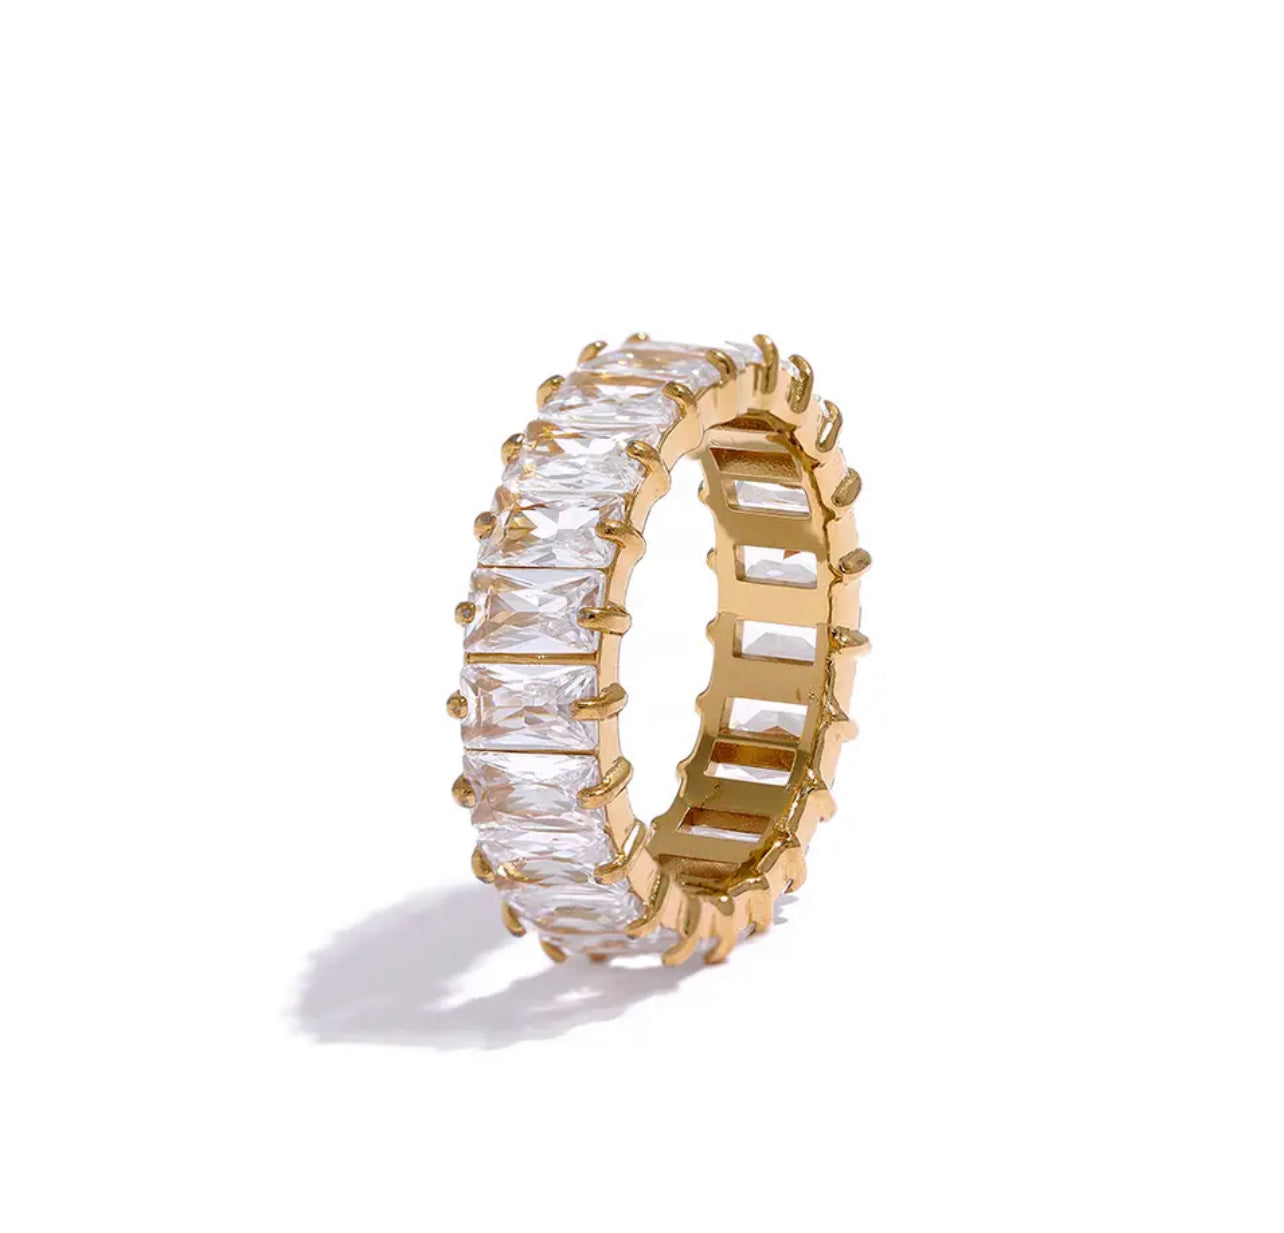 Erika Williner Designs - Candy ring